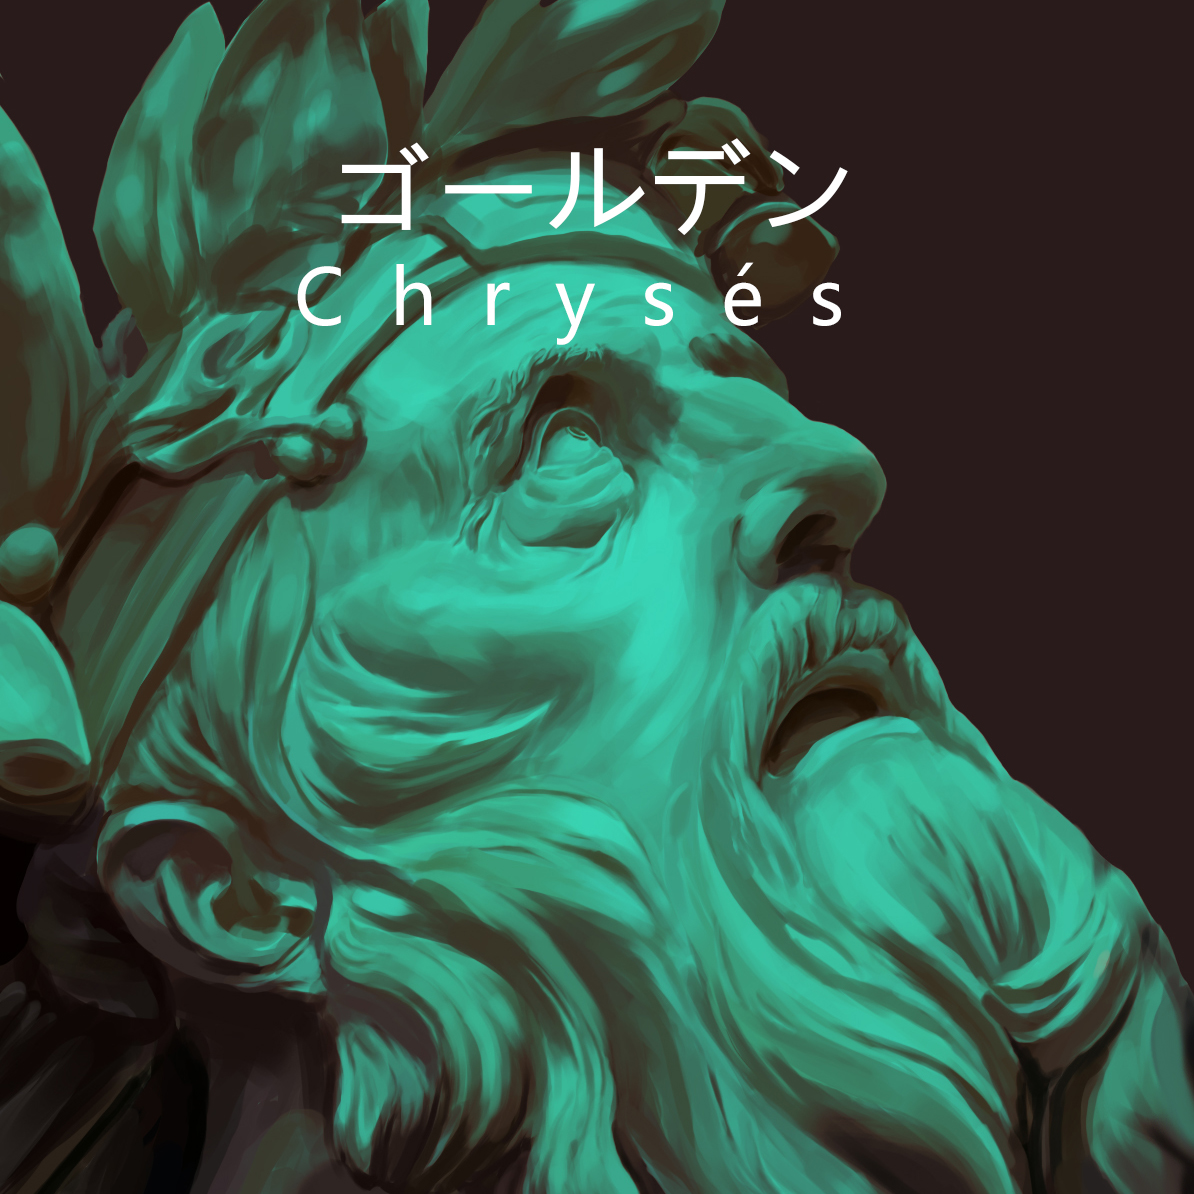 Chrysés sculpture album cover music cover portrait colorful CD cover book cover digital painting